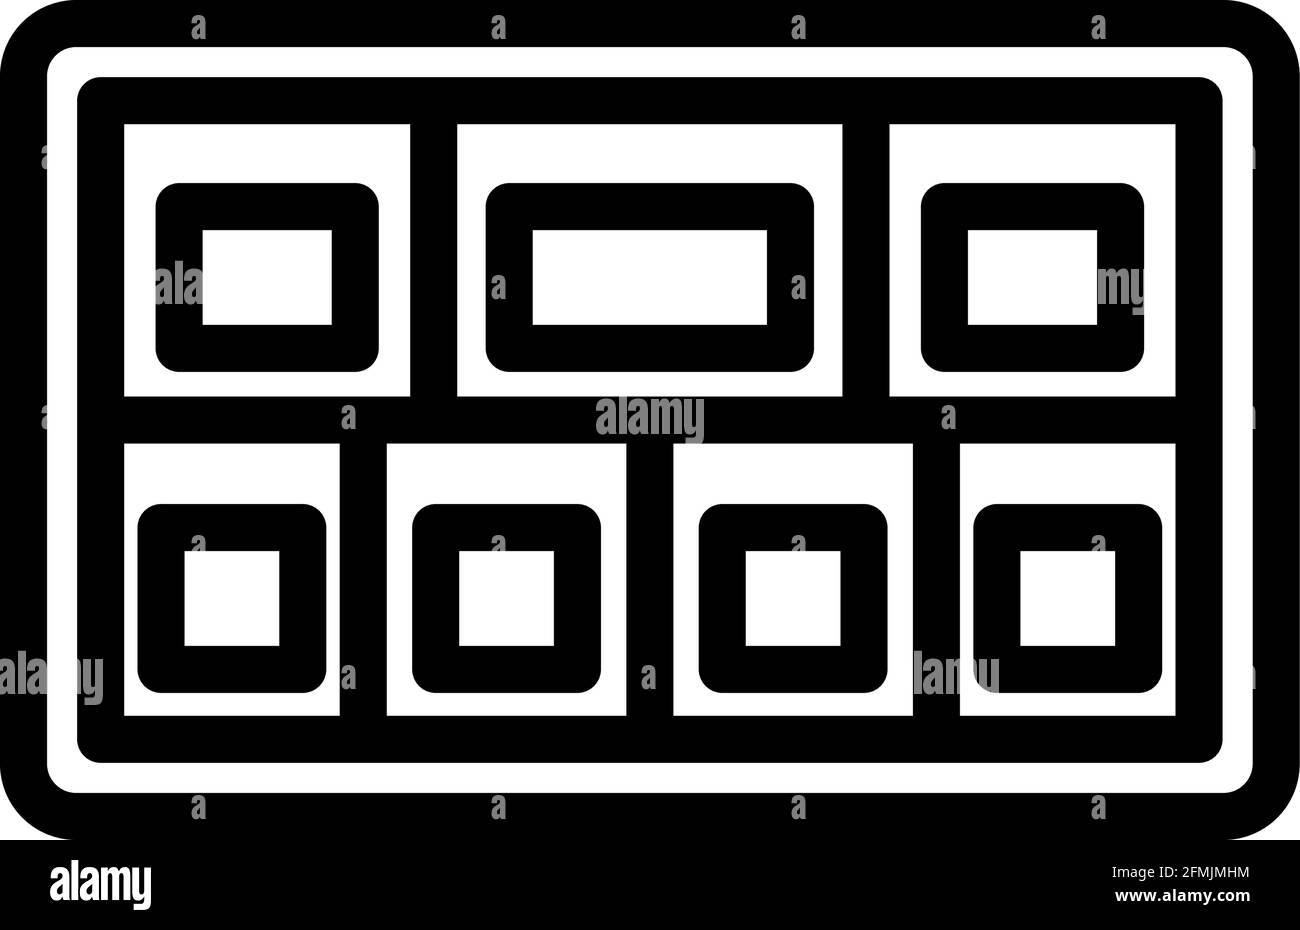 American Football Scoreboard Icon. Editable Bold Outline Design. Vector Illustration. Stock Vector